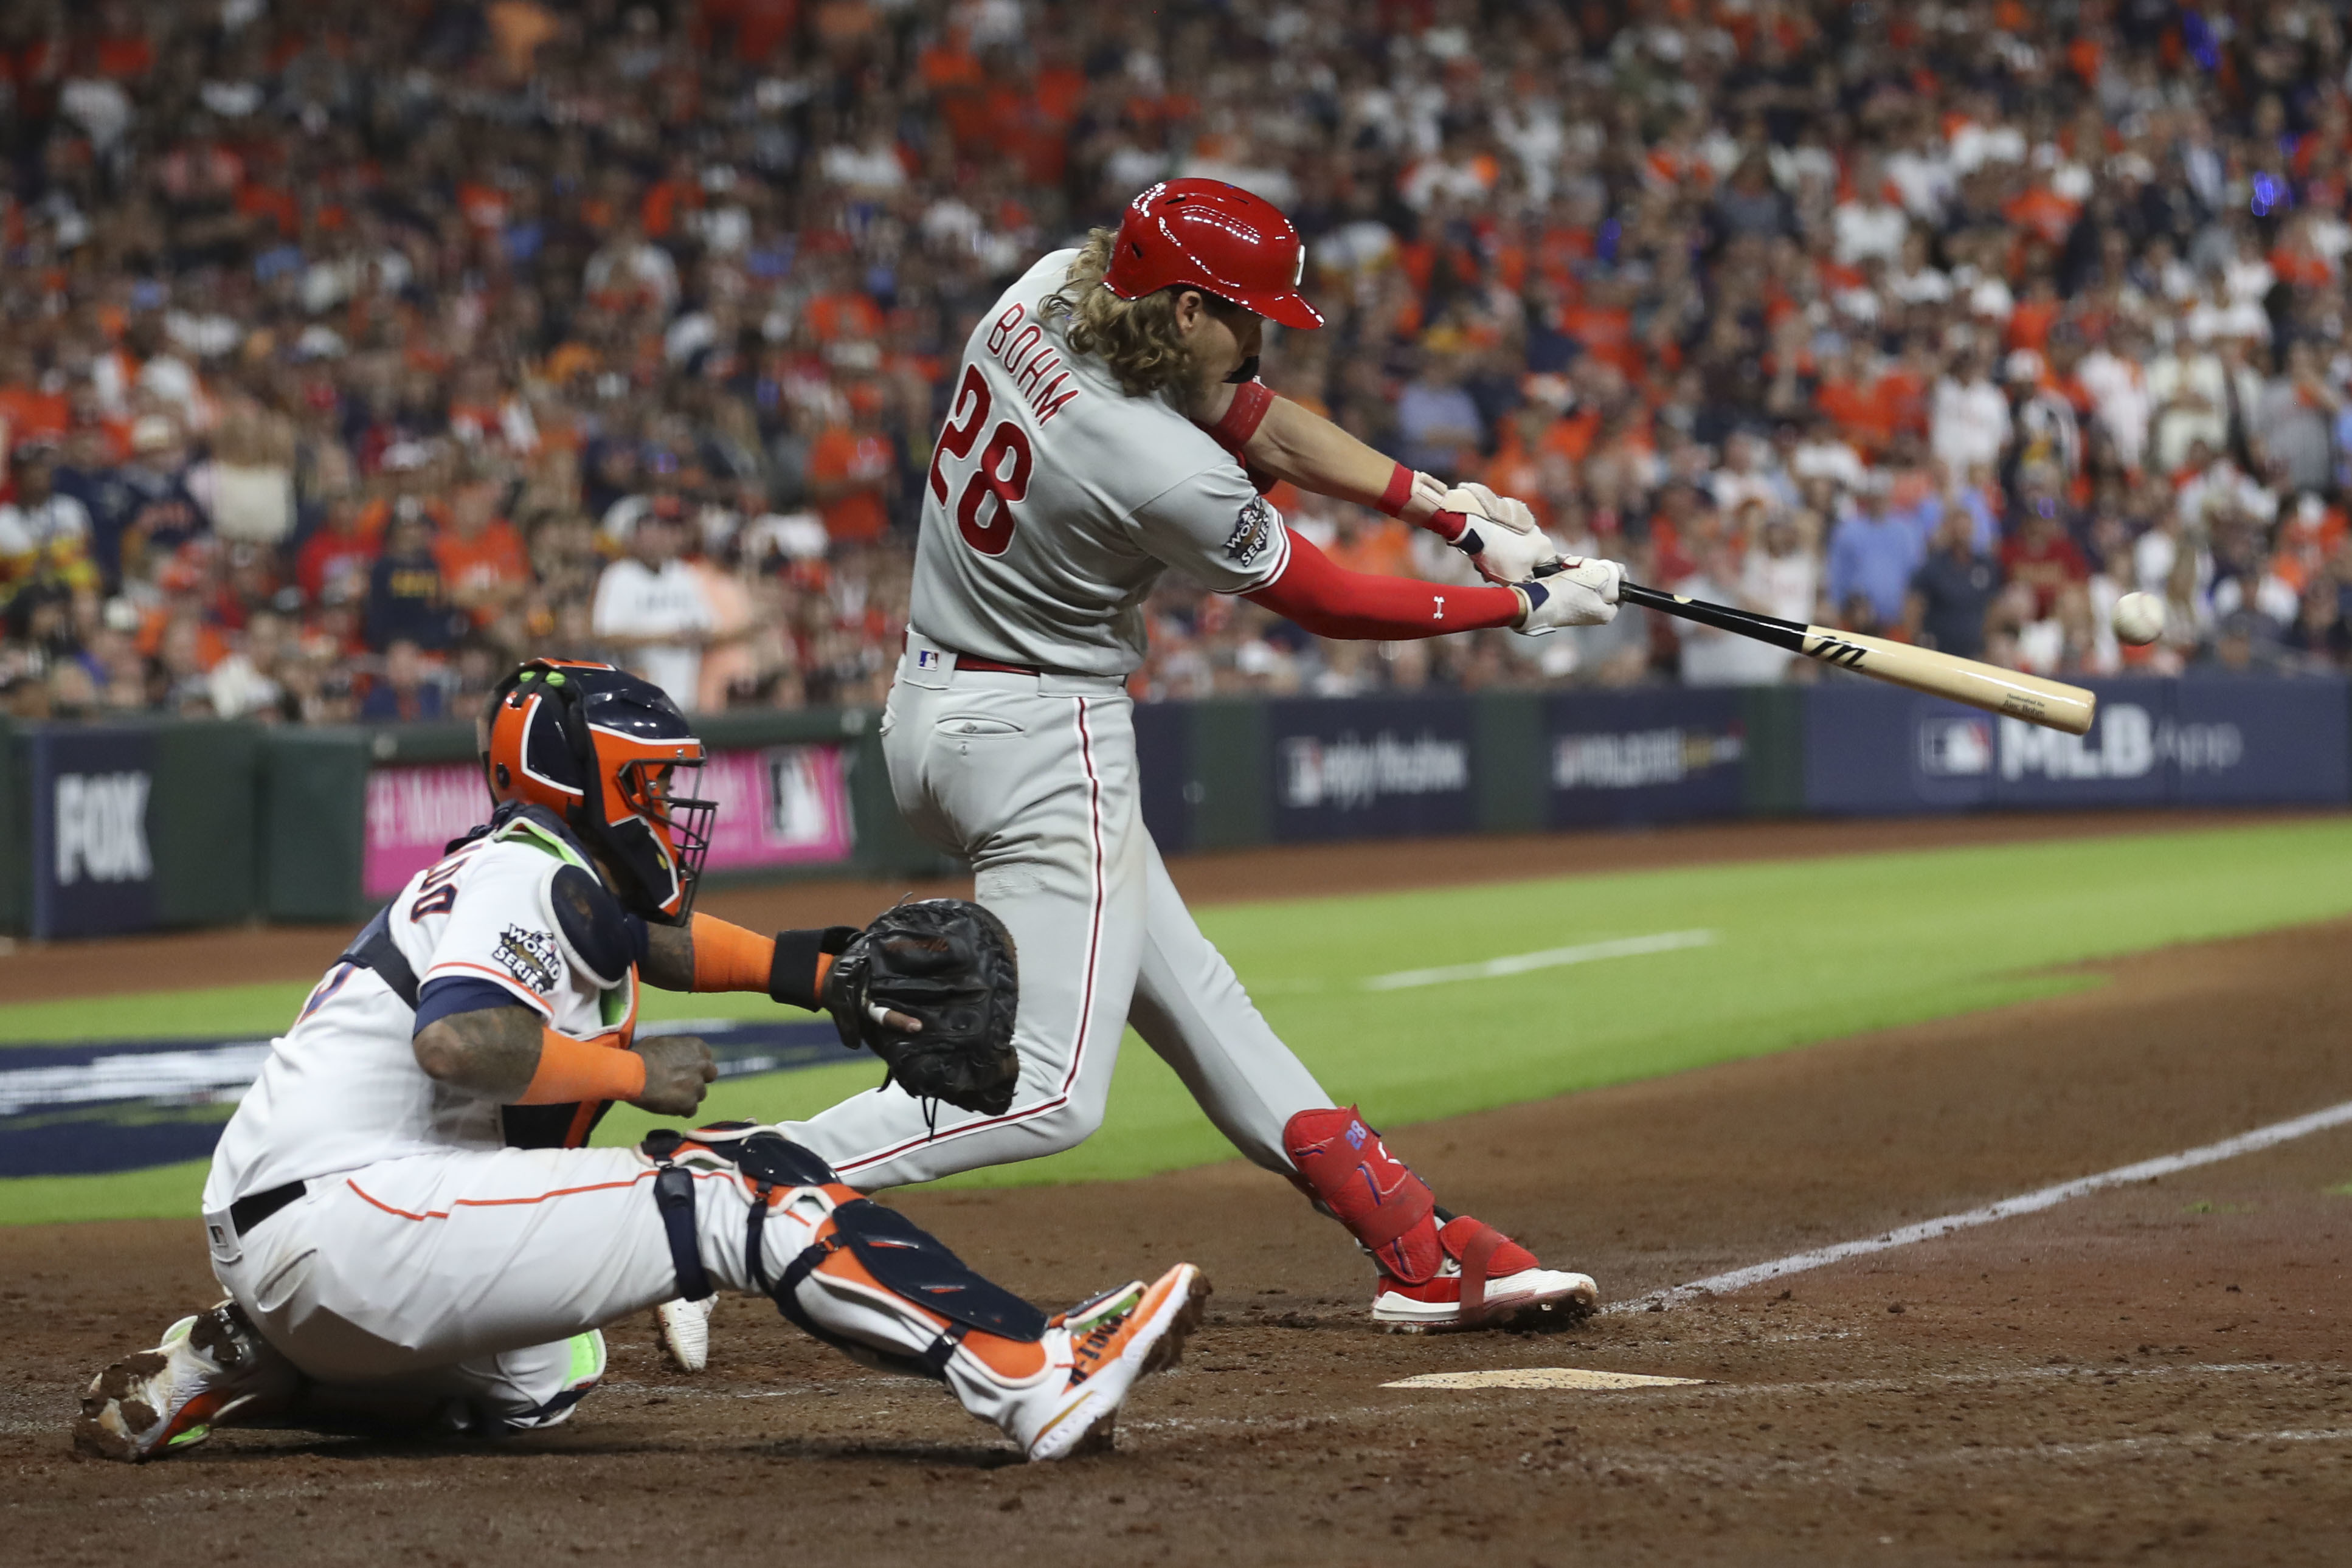 MLB declared Astros' Martin Maldonado's bat illegal